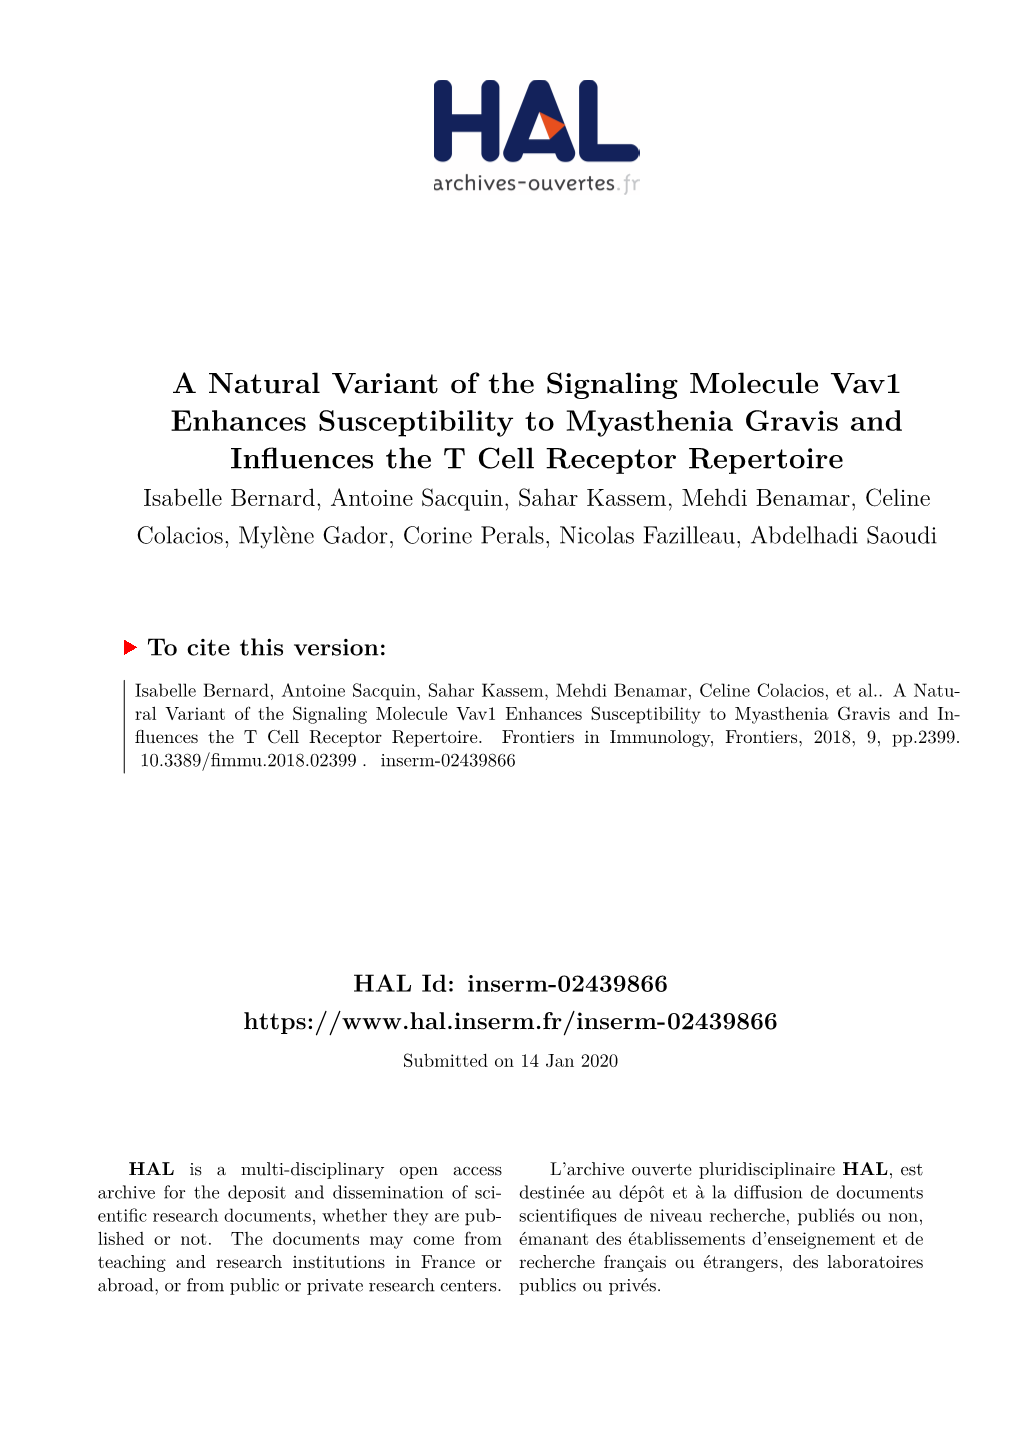 A Natural Variant of the Signaling Molecule Vav1 Enhances